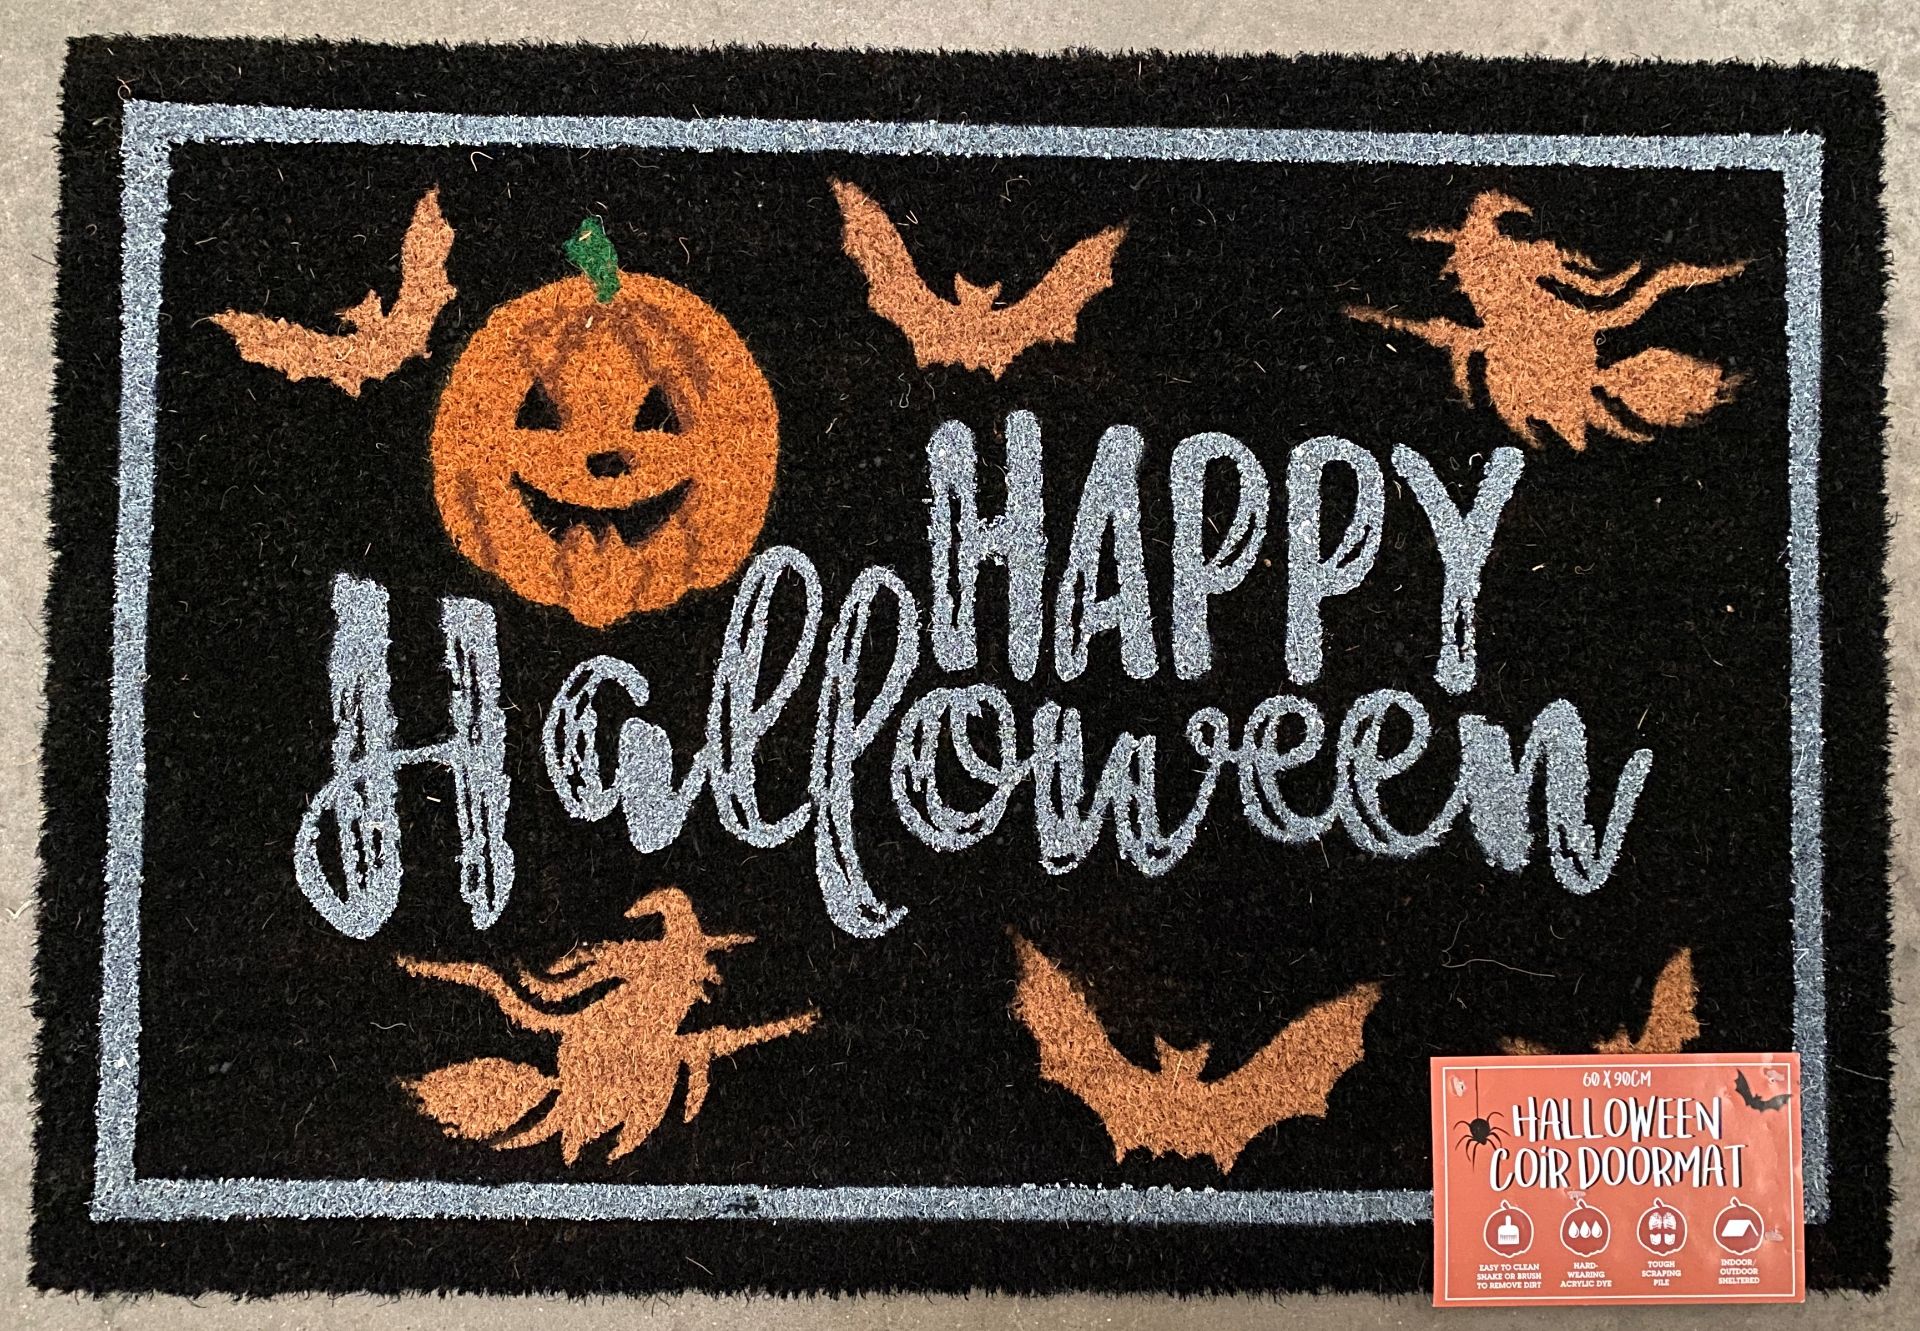 Contents to pallet - 100 x Happy Halloween Premium Coir Extra Large Doormats - 60cm x 90cm - Packs